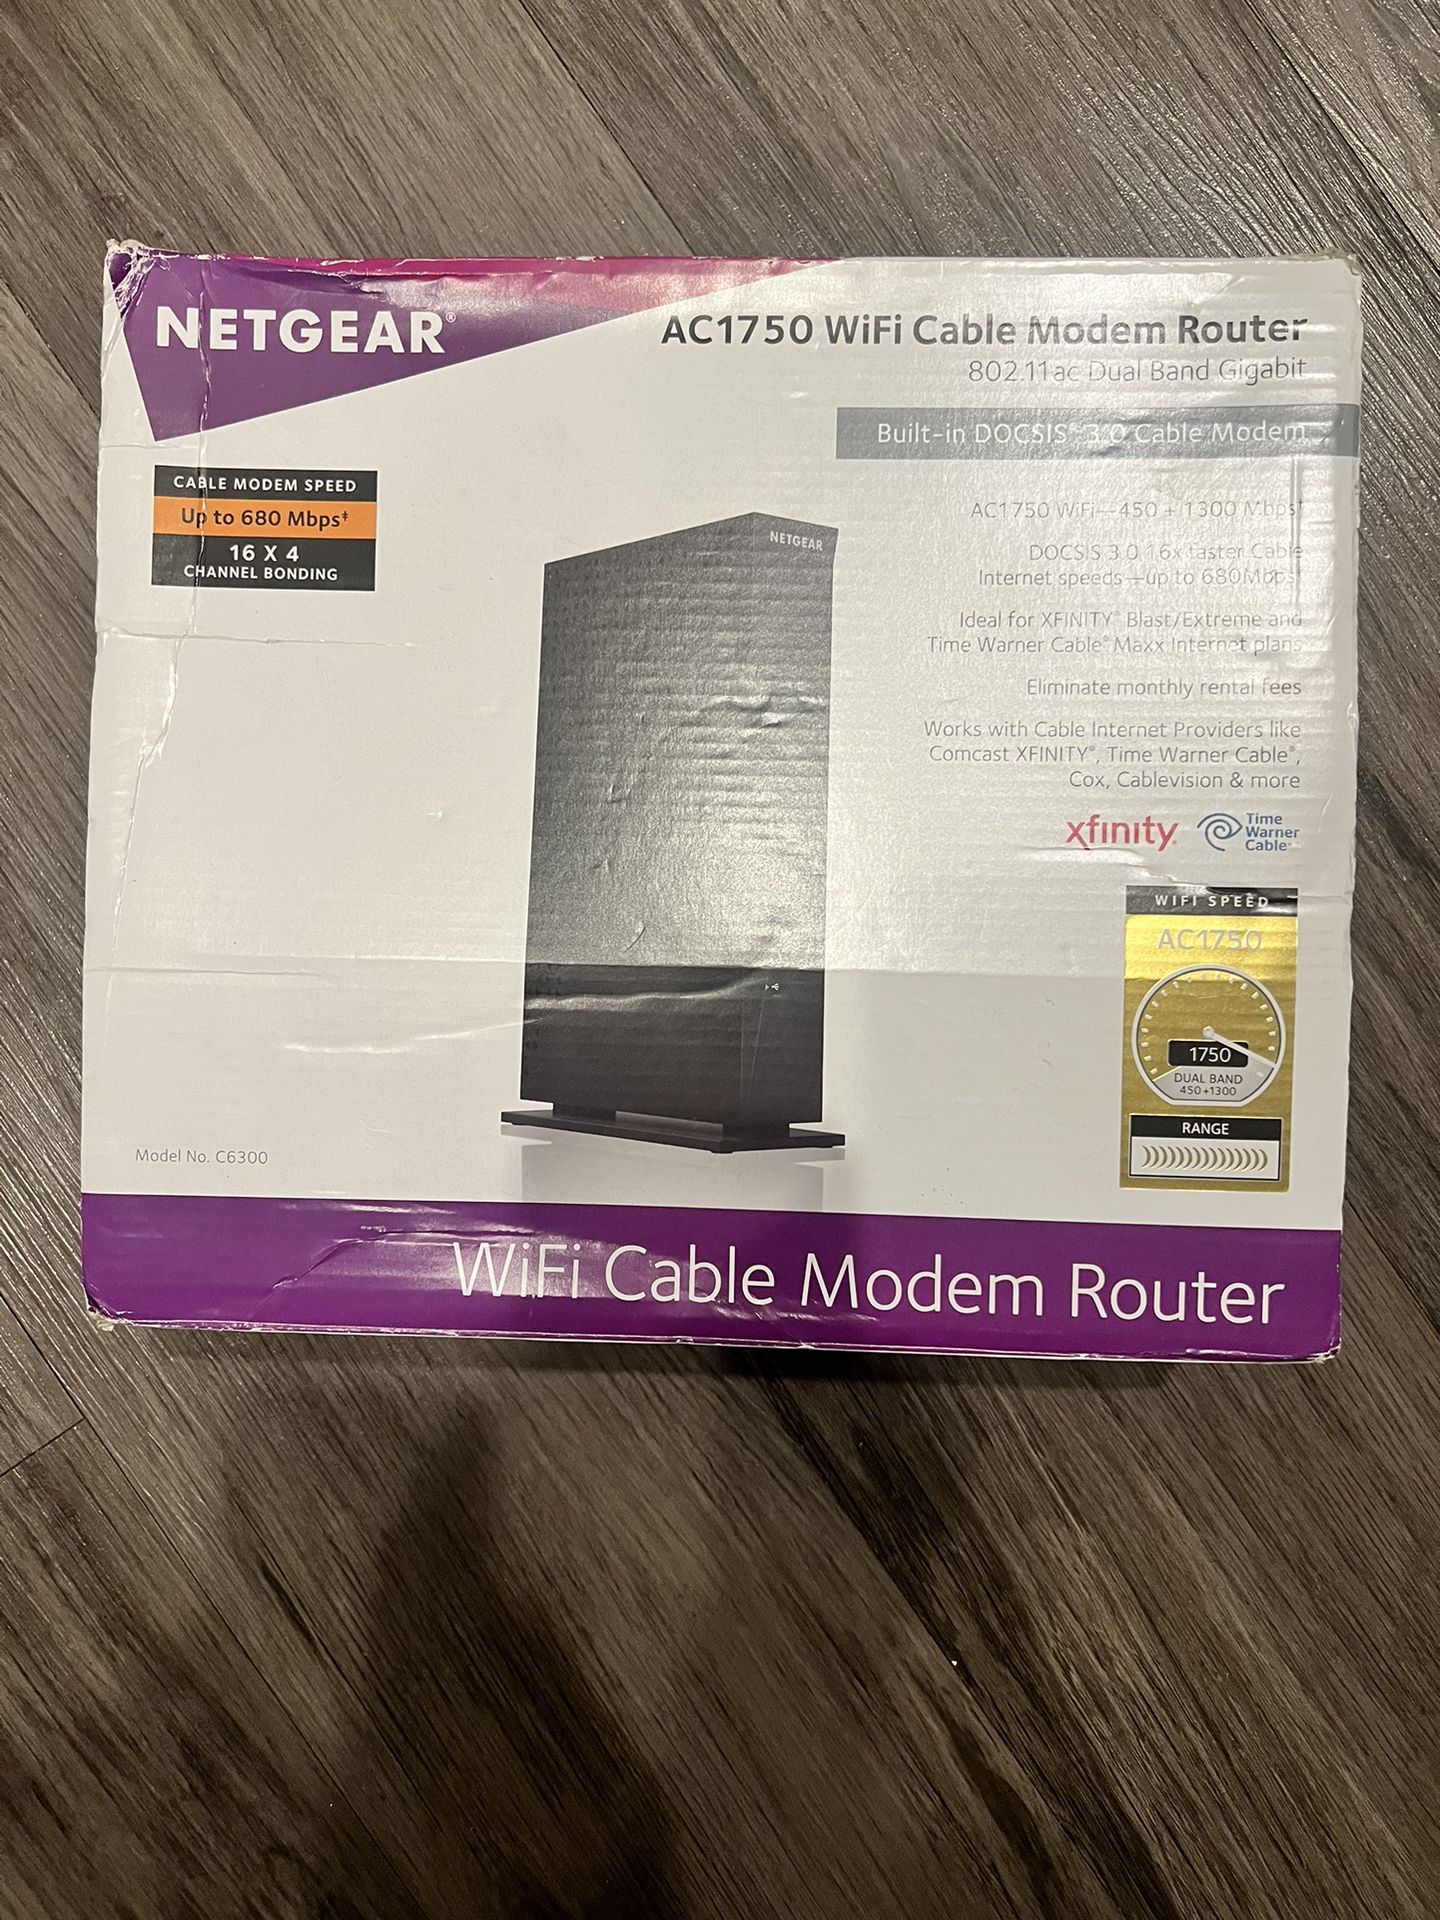 Netgear AC1750 WiFi Cable Modem Router